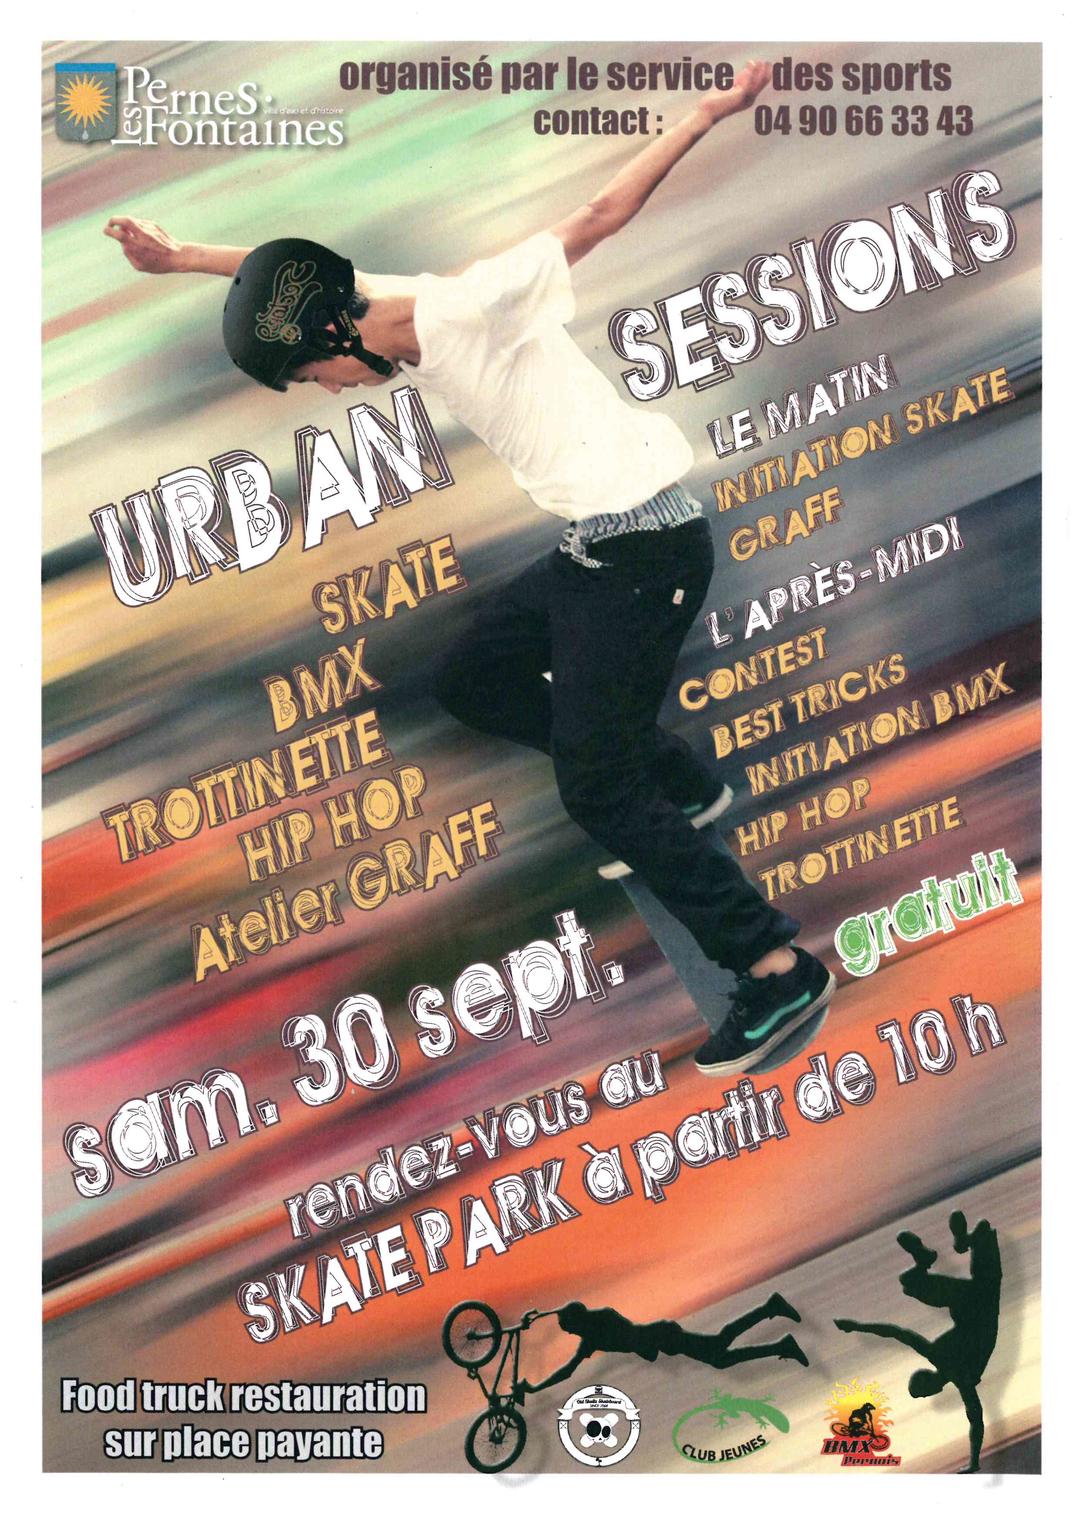 Sport : urban sessions